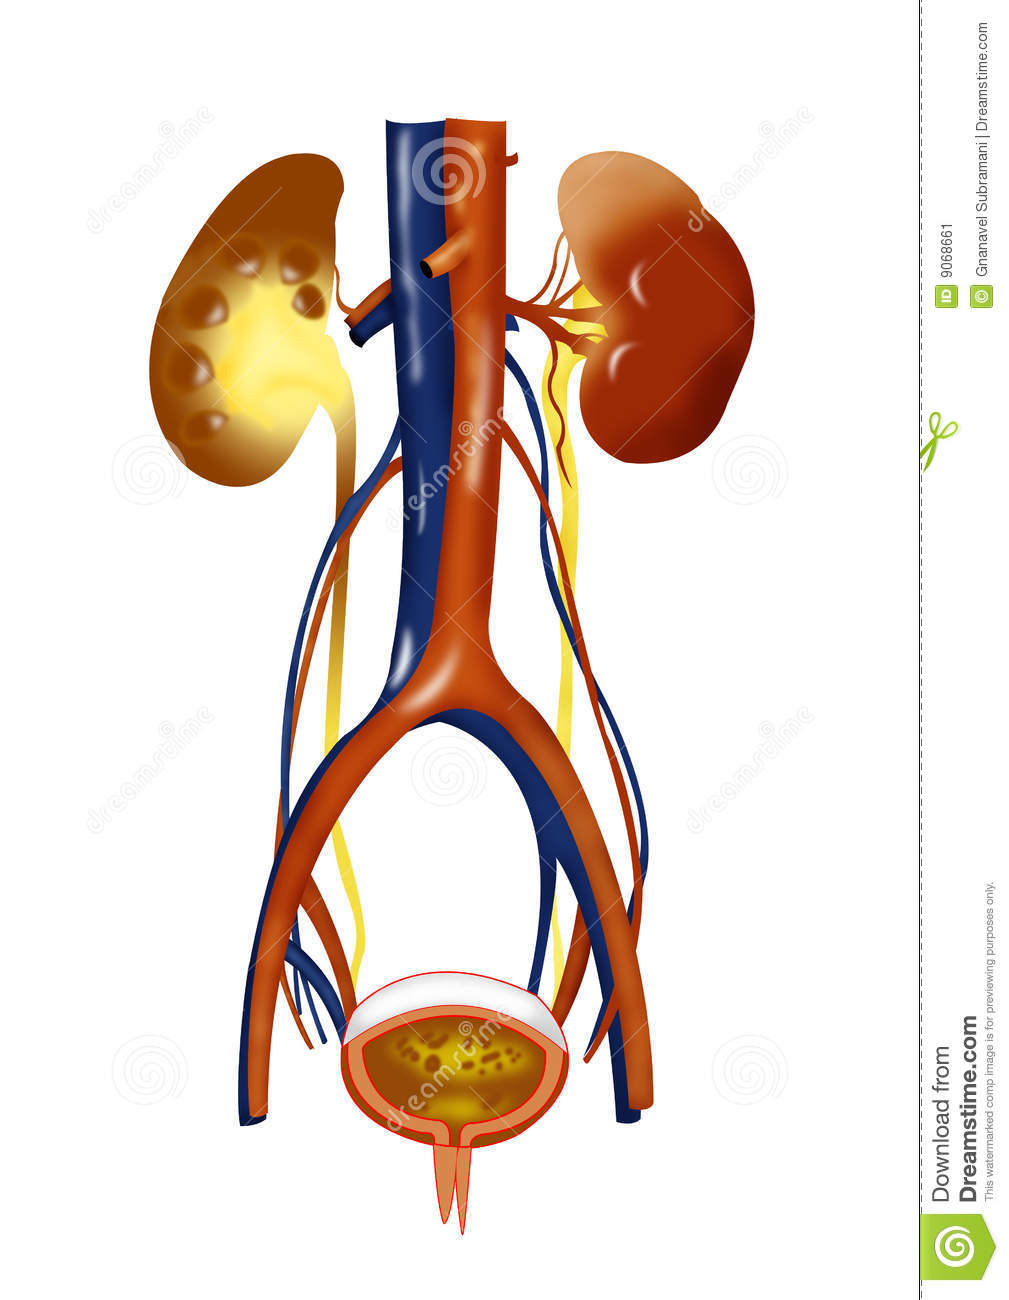 Kidney Transplant Clipart Kidney